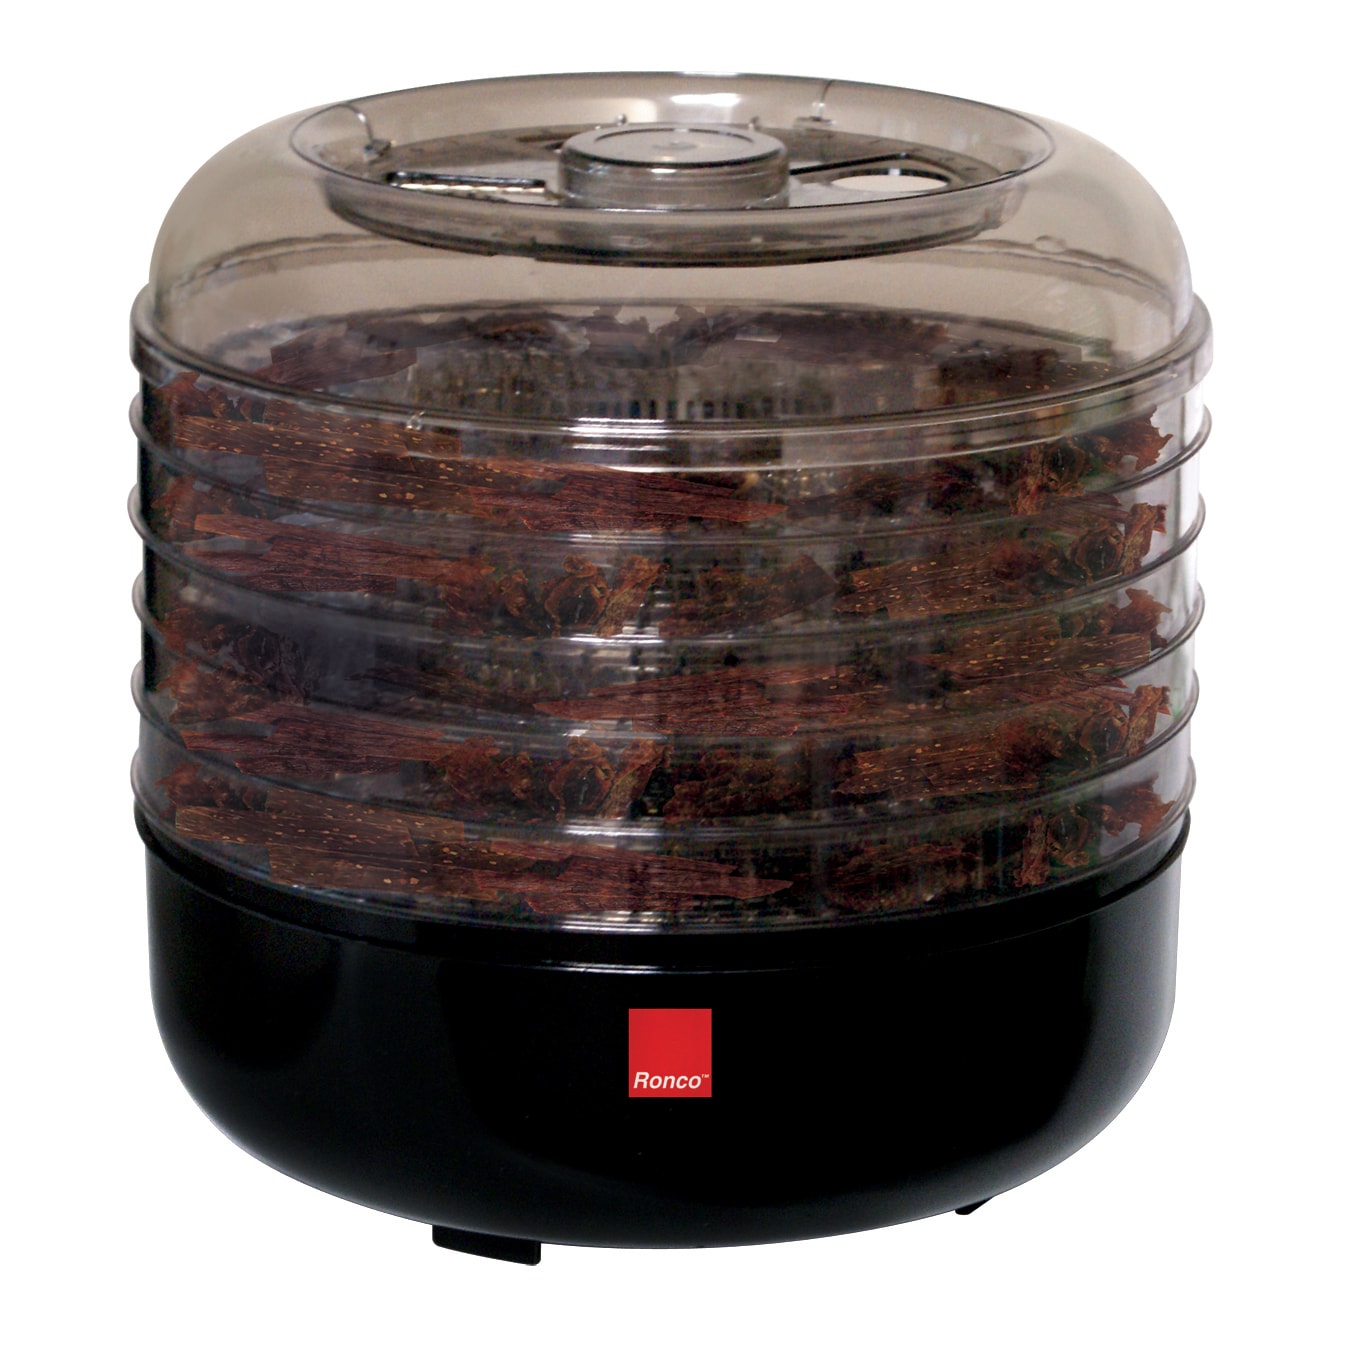 Ronco 5 Tray Electric Food Dehydrator Beef Jerky Machine Model